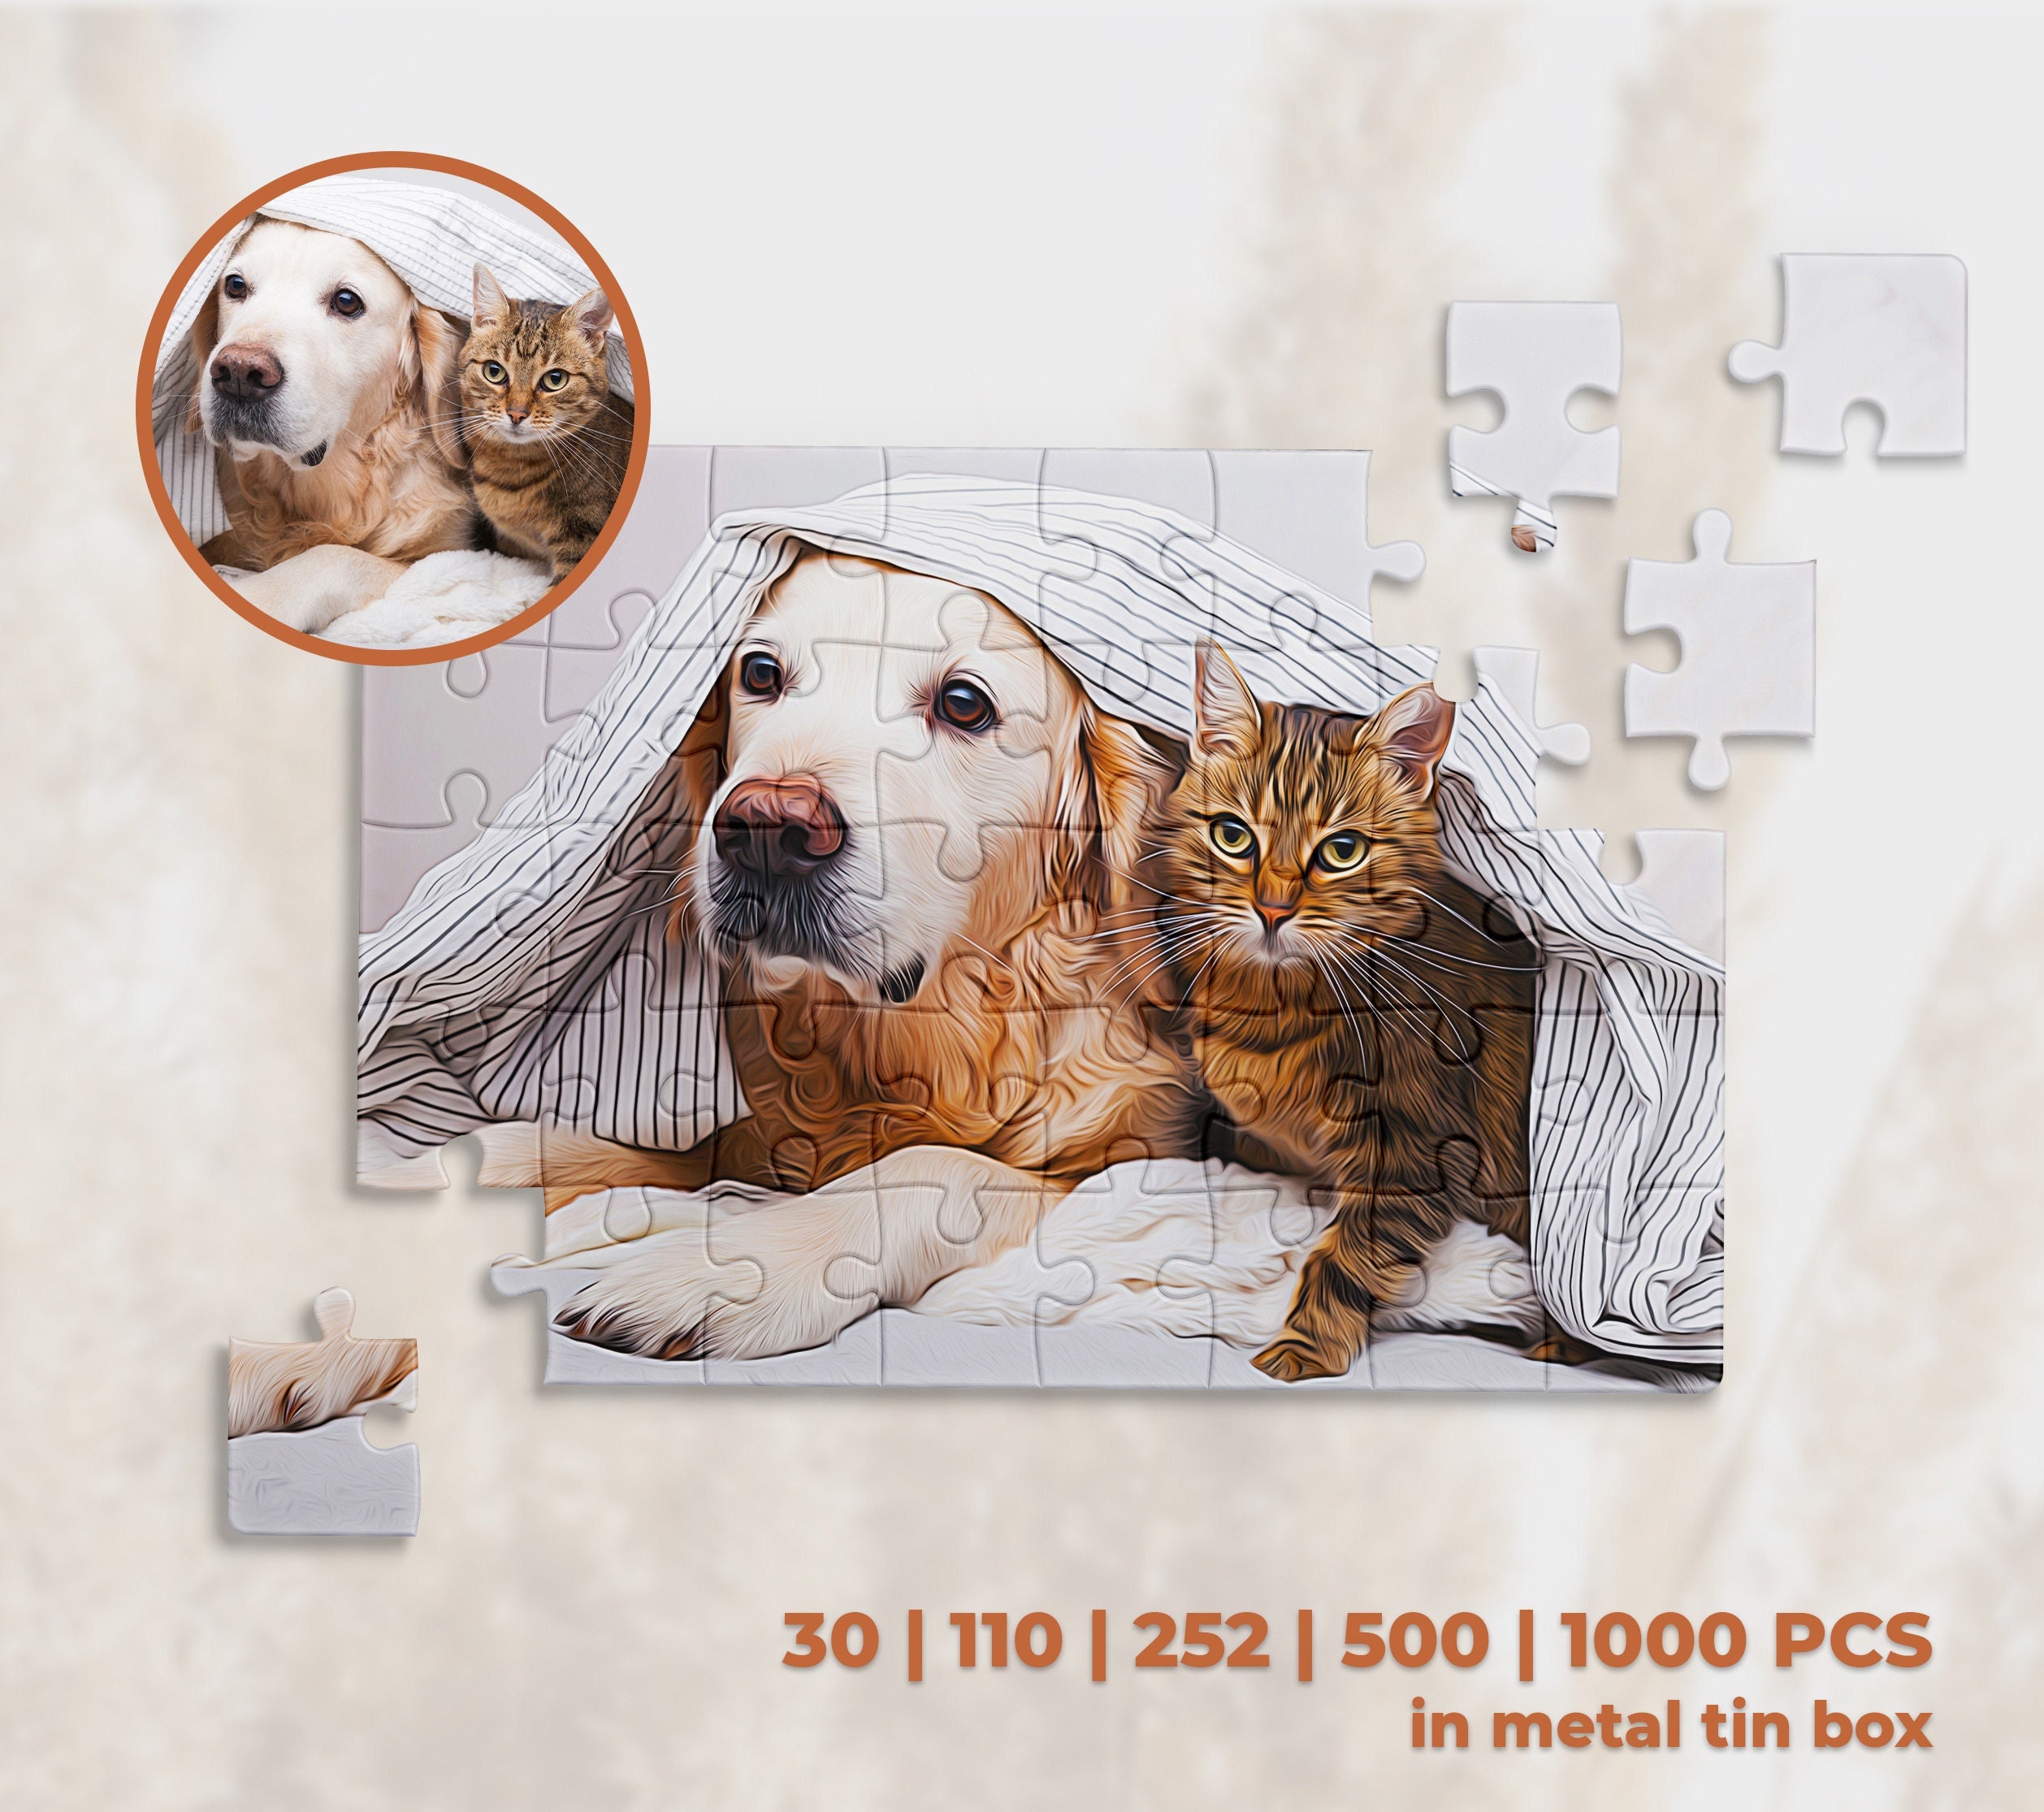 1000 Piece Puzzle, Rescue Dogs